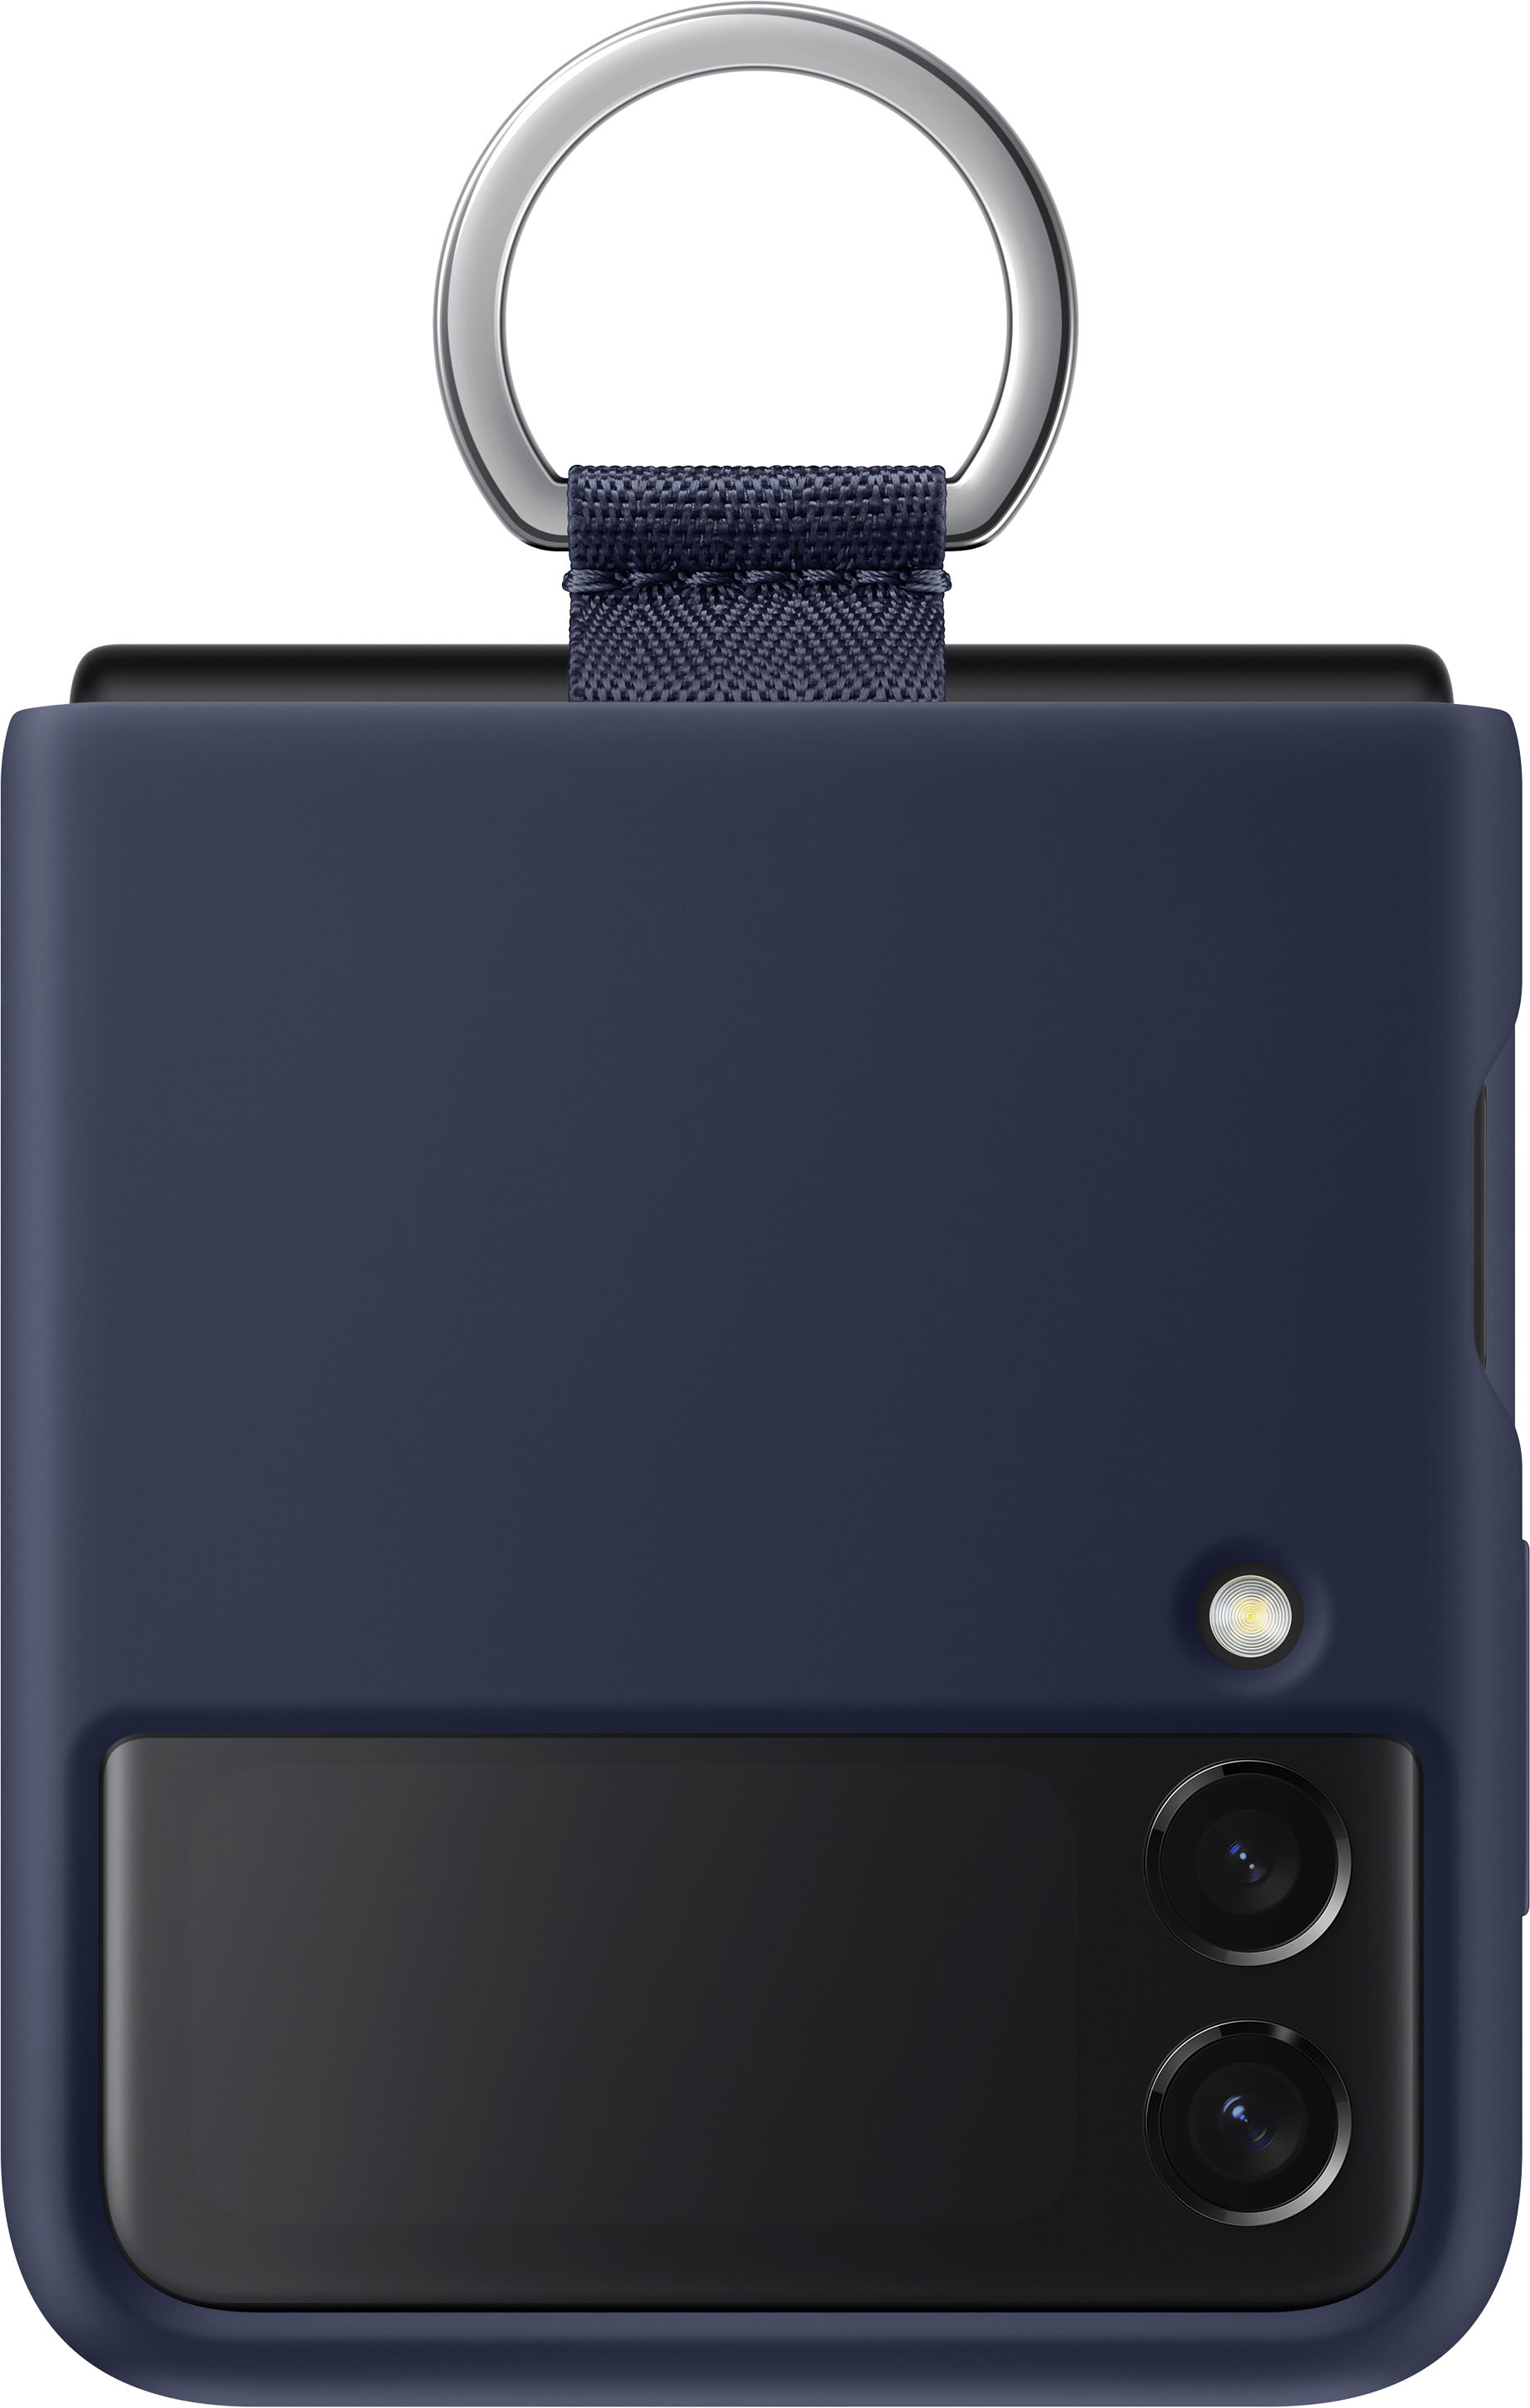 LoveCases Samsung Galaxy Z Flip 3 Thin Case - Blue Butterfly